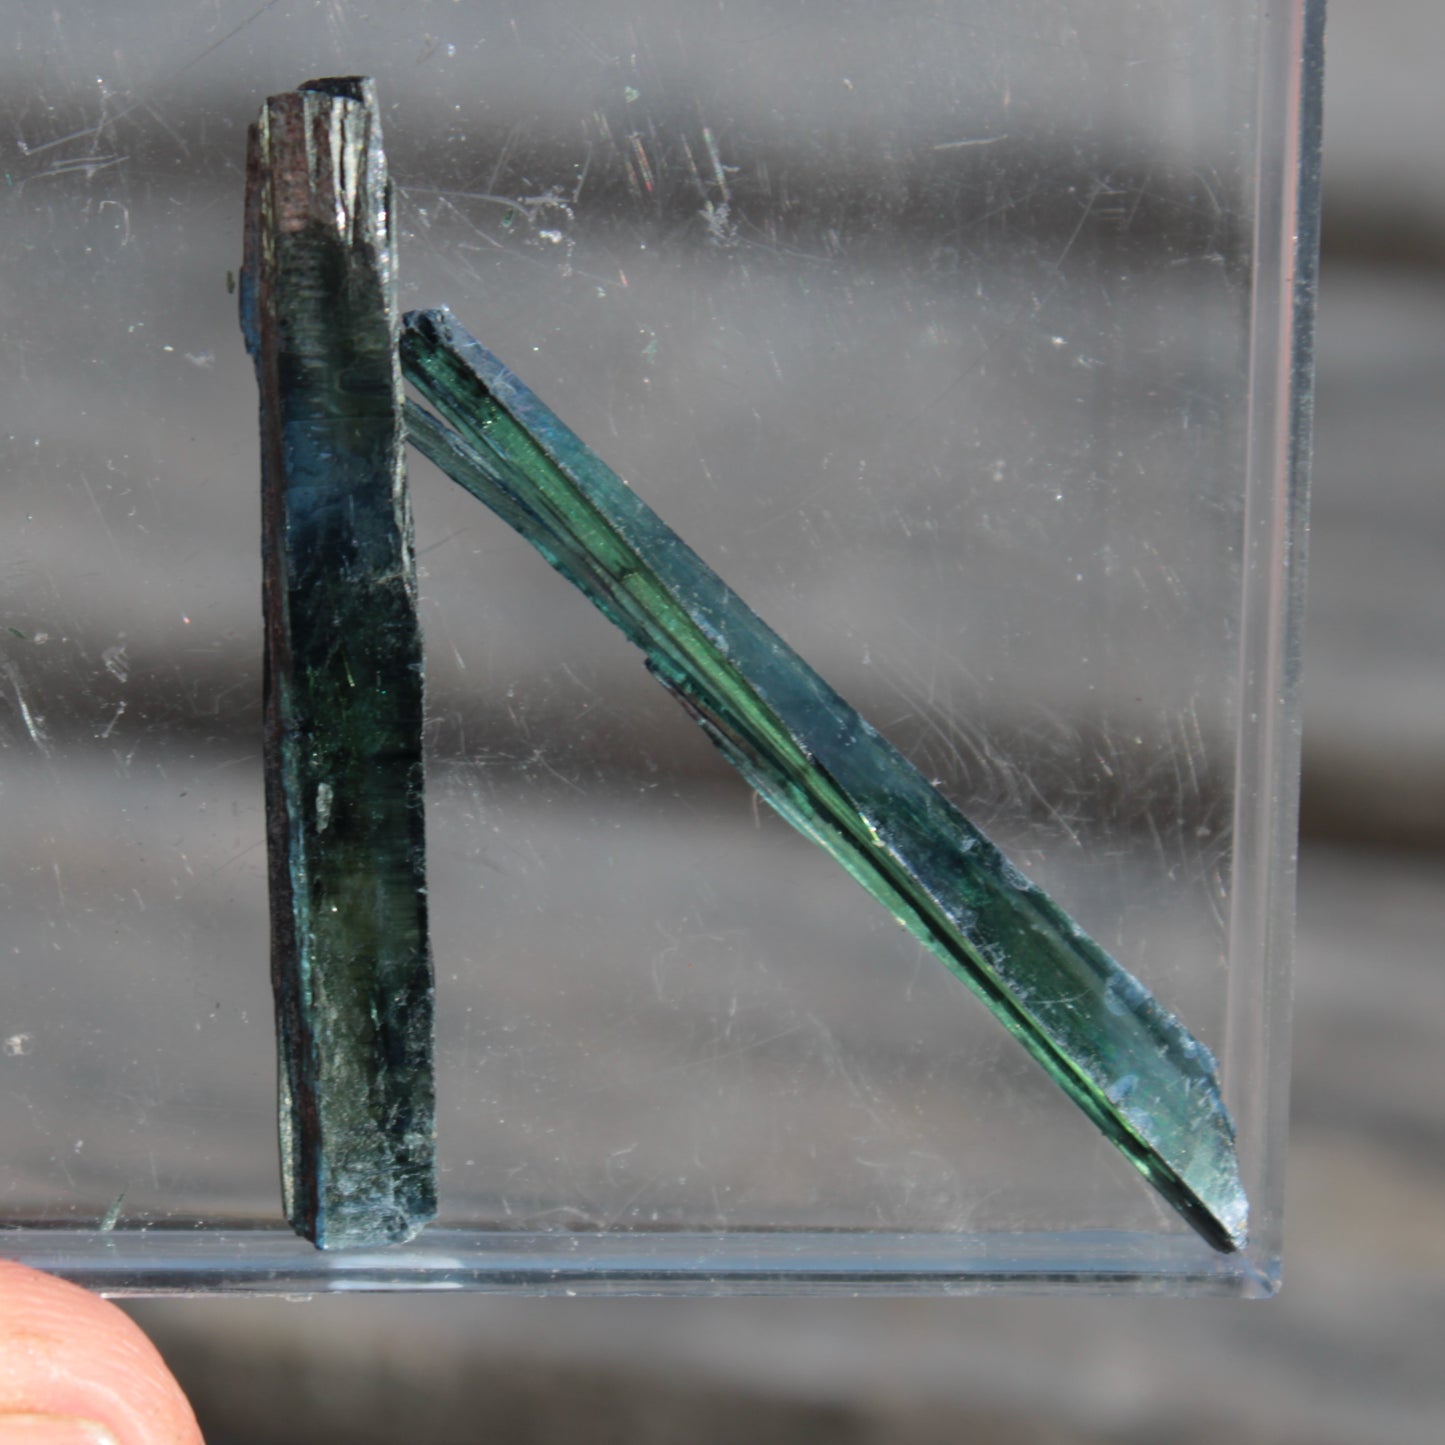 Vivianite Ludlamite 2 crystals 40/42mm from Brazil 2.1g